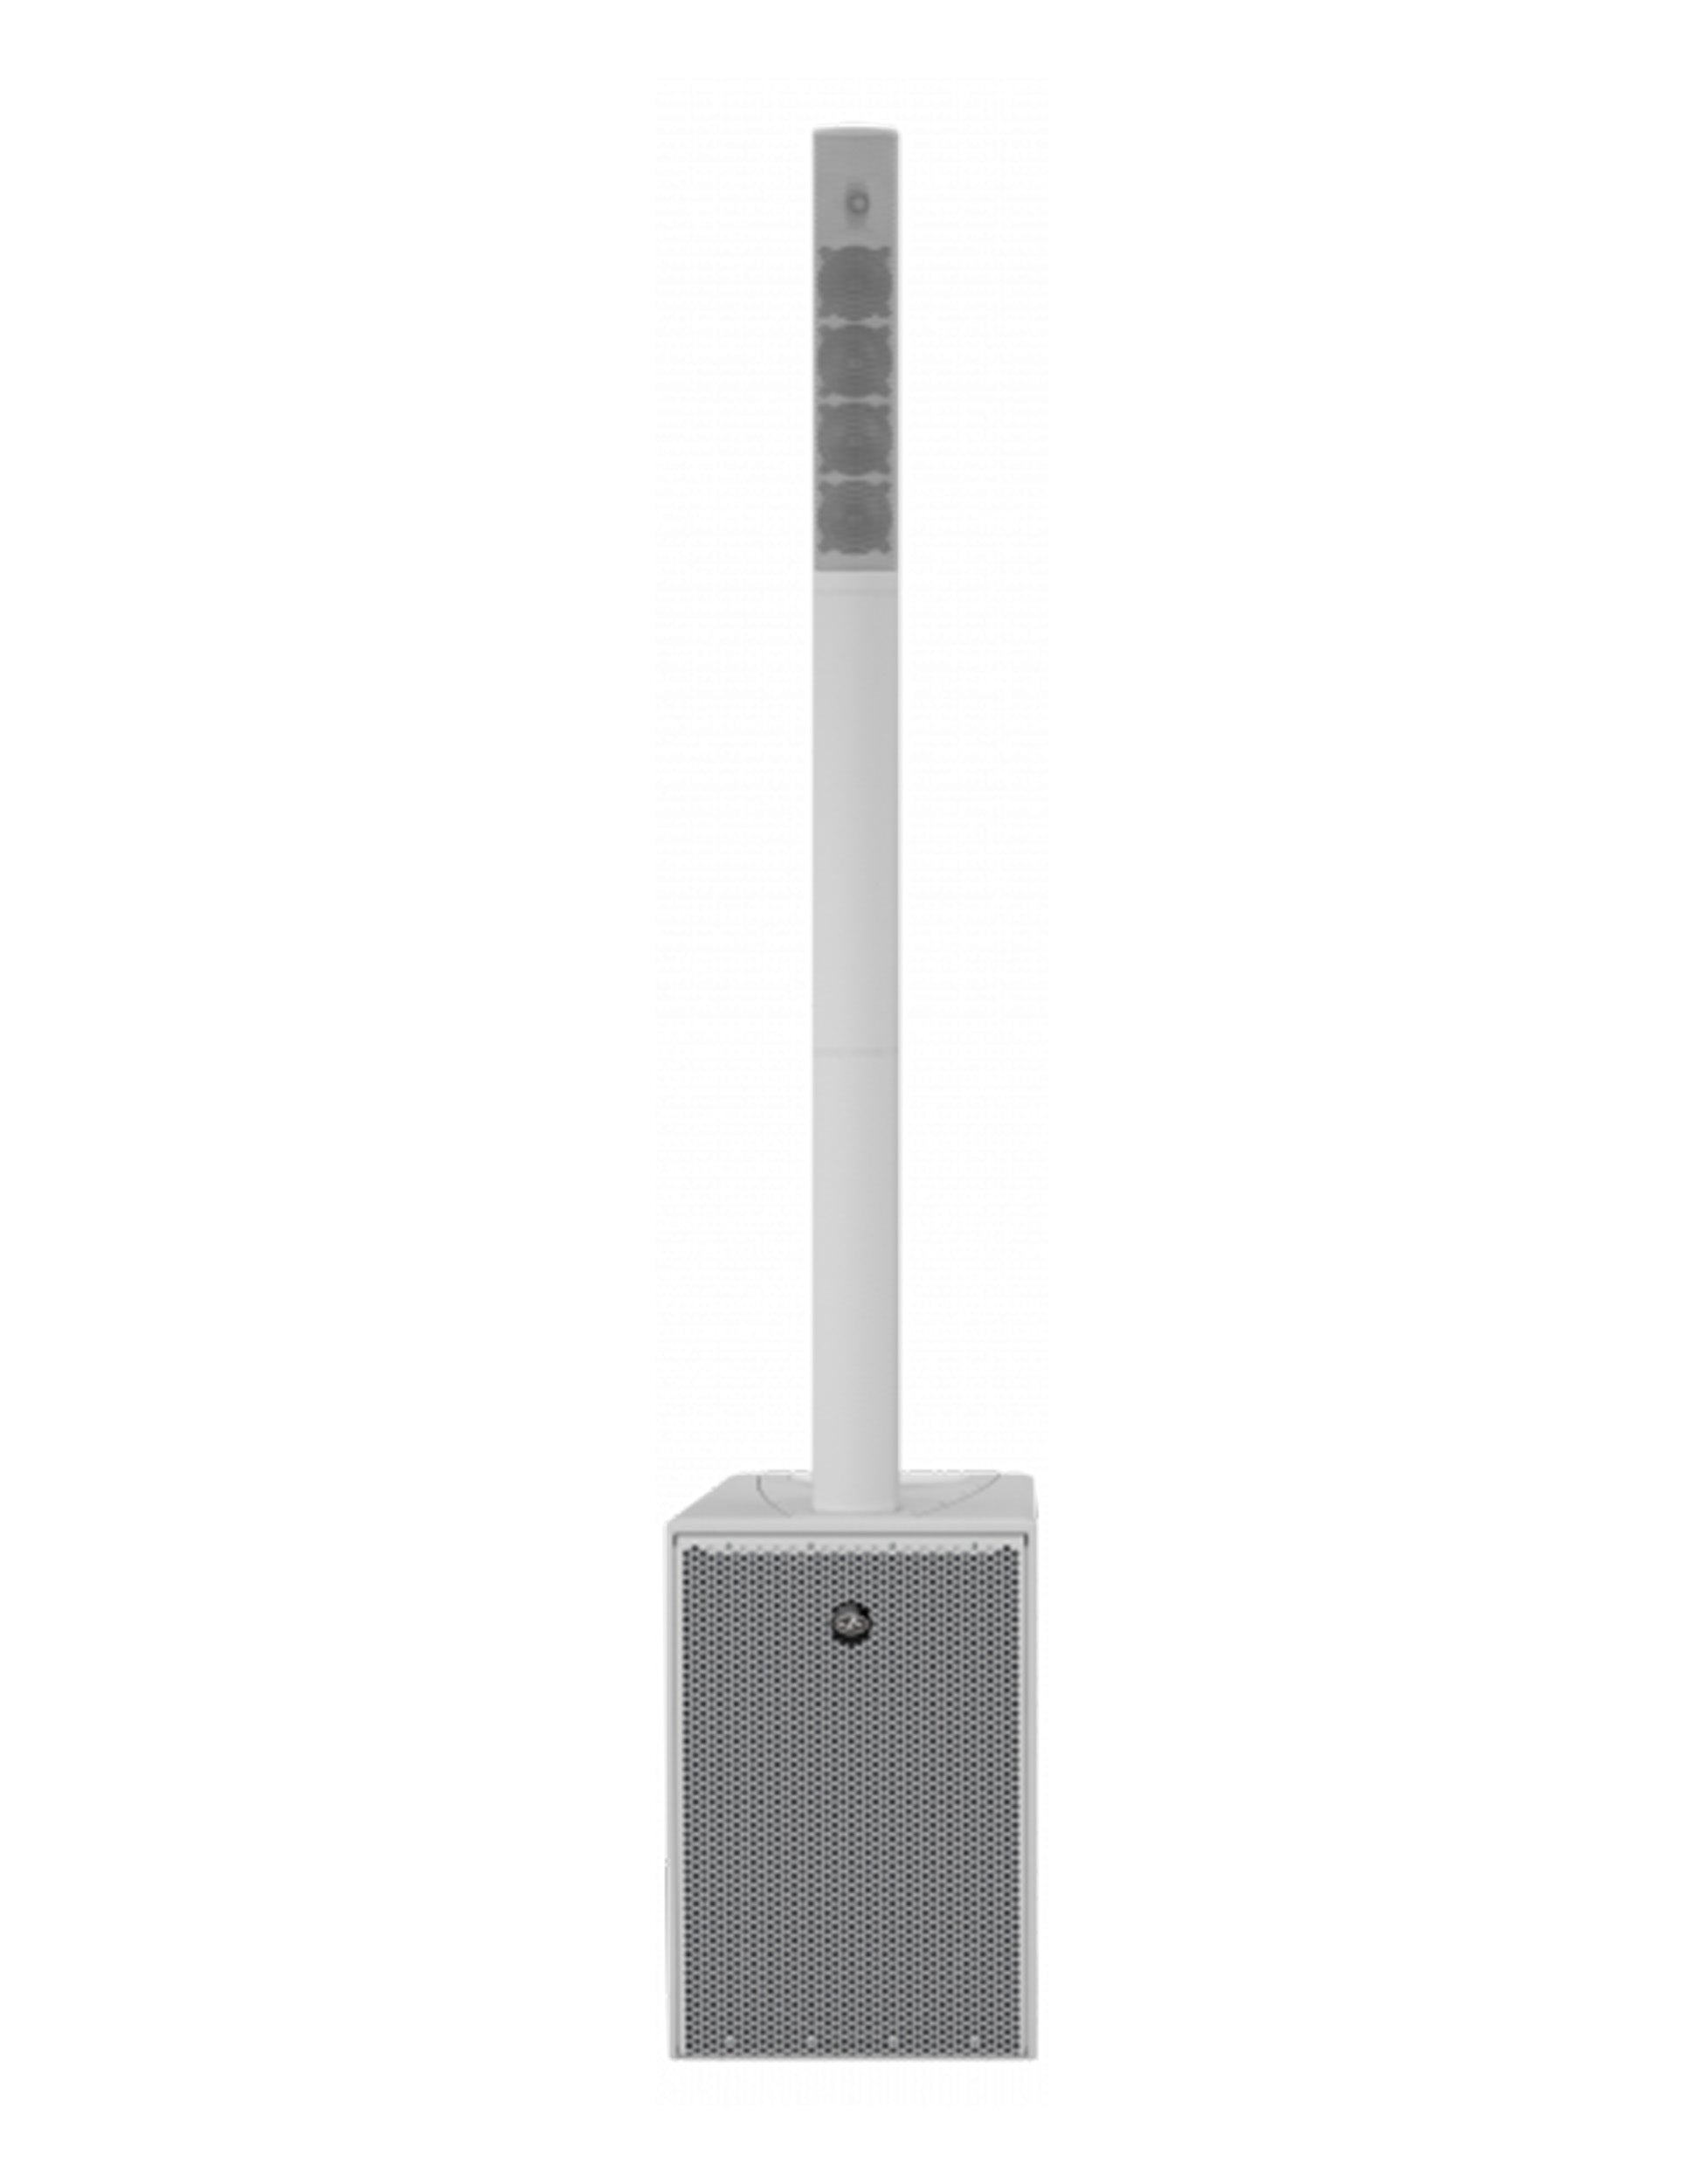 B-Stock: DAS Audio ALTEA-DUO-20A-W, 3-Way Powered Portable Column System - White by DAS Audio